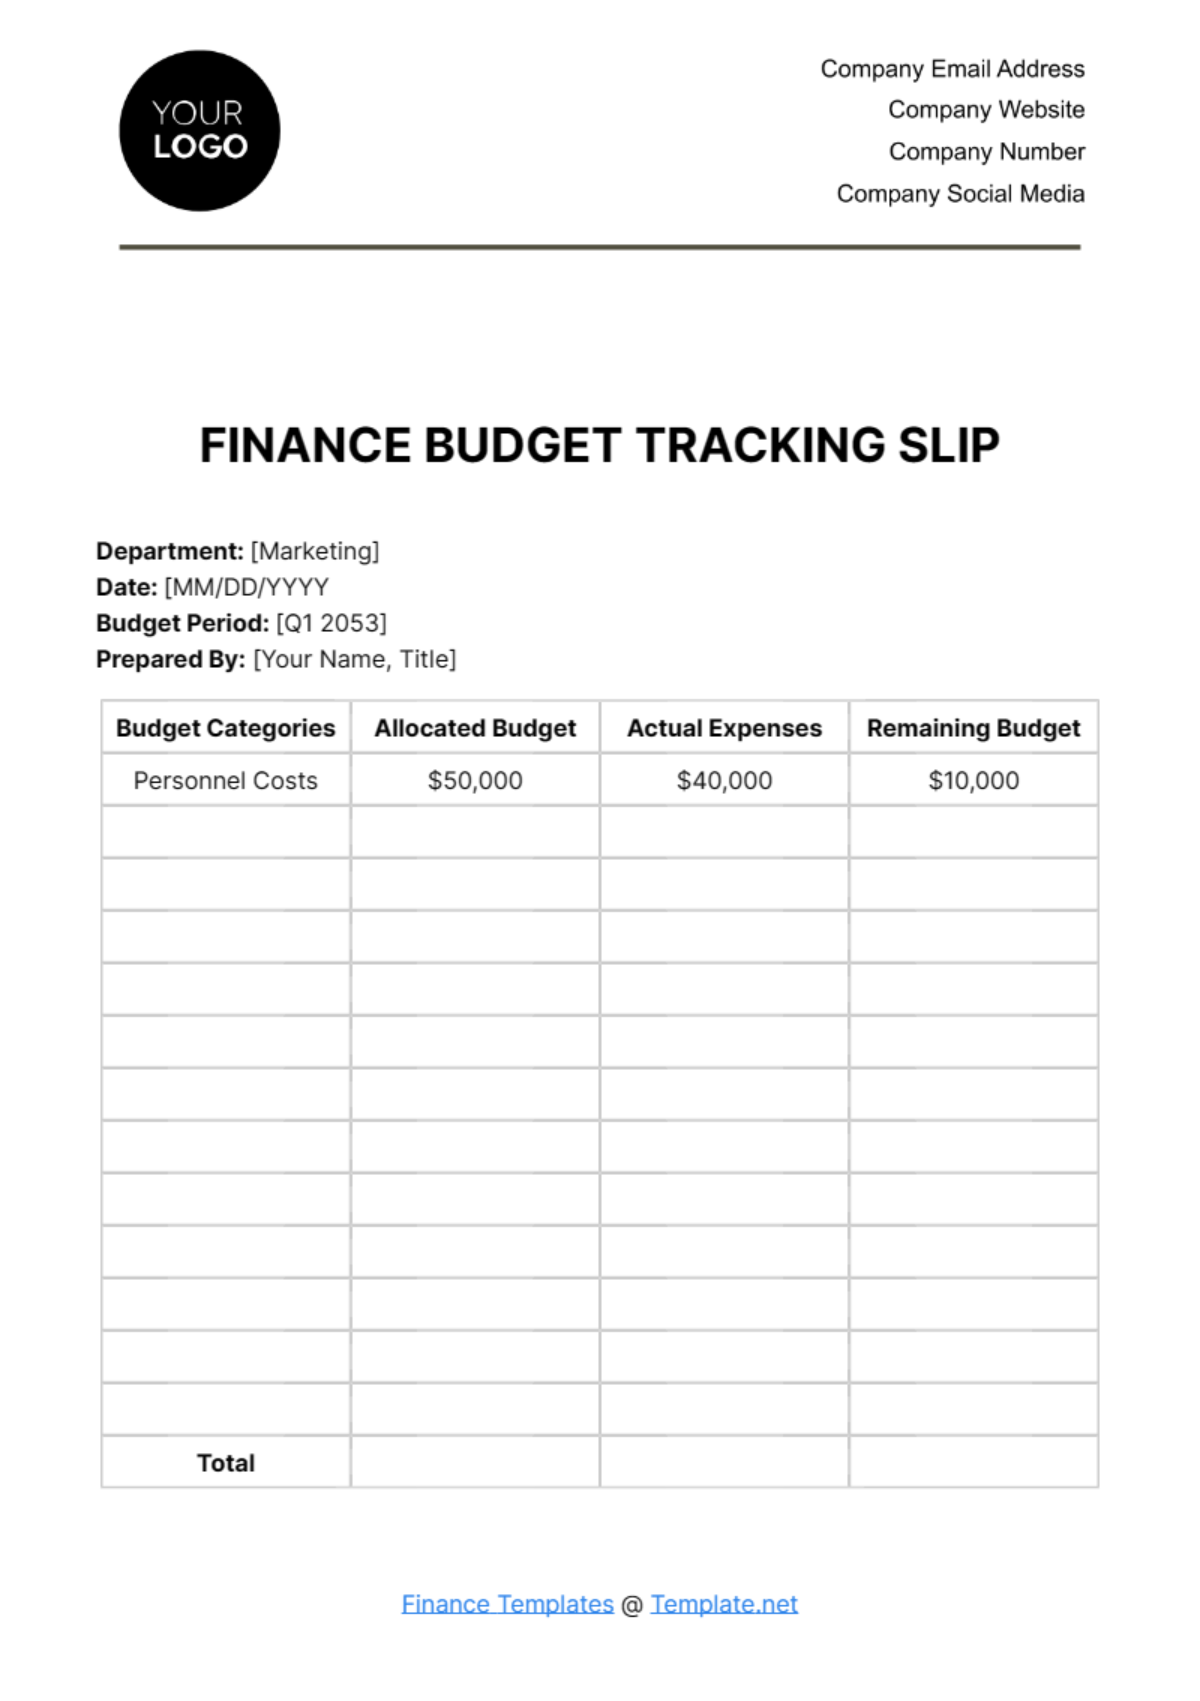 Free Finance Budget Tracking Slip Template